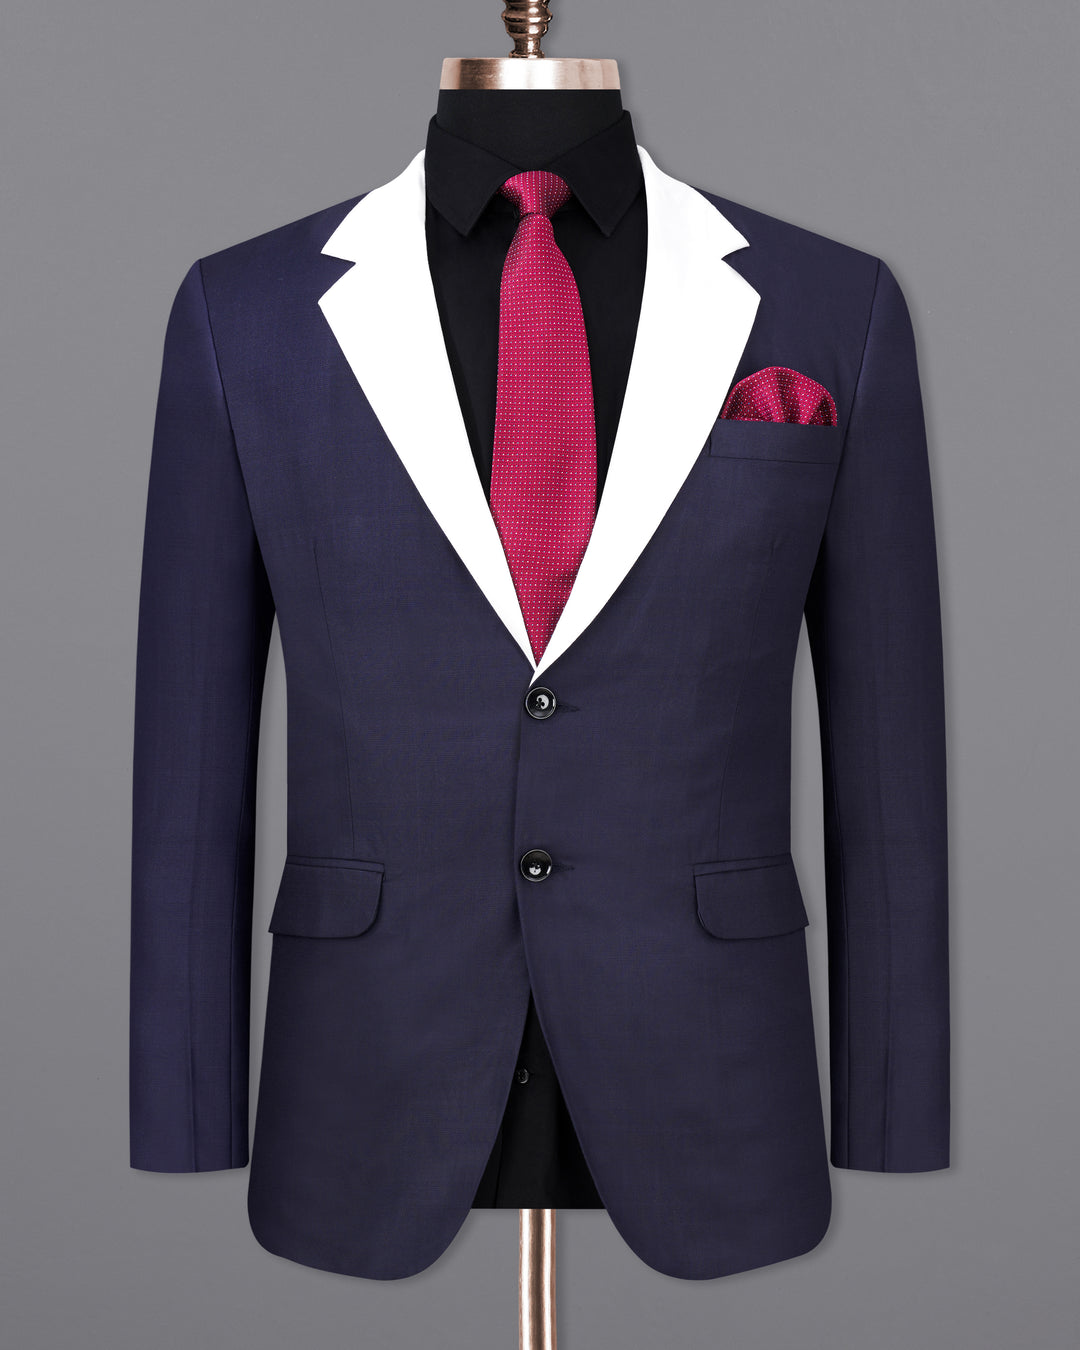 The Best Interview Suit Color - Knot Standard Blog